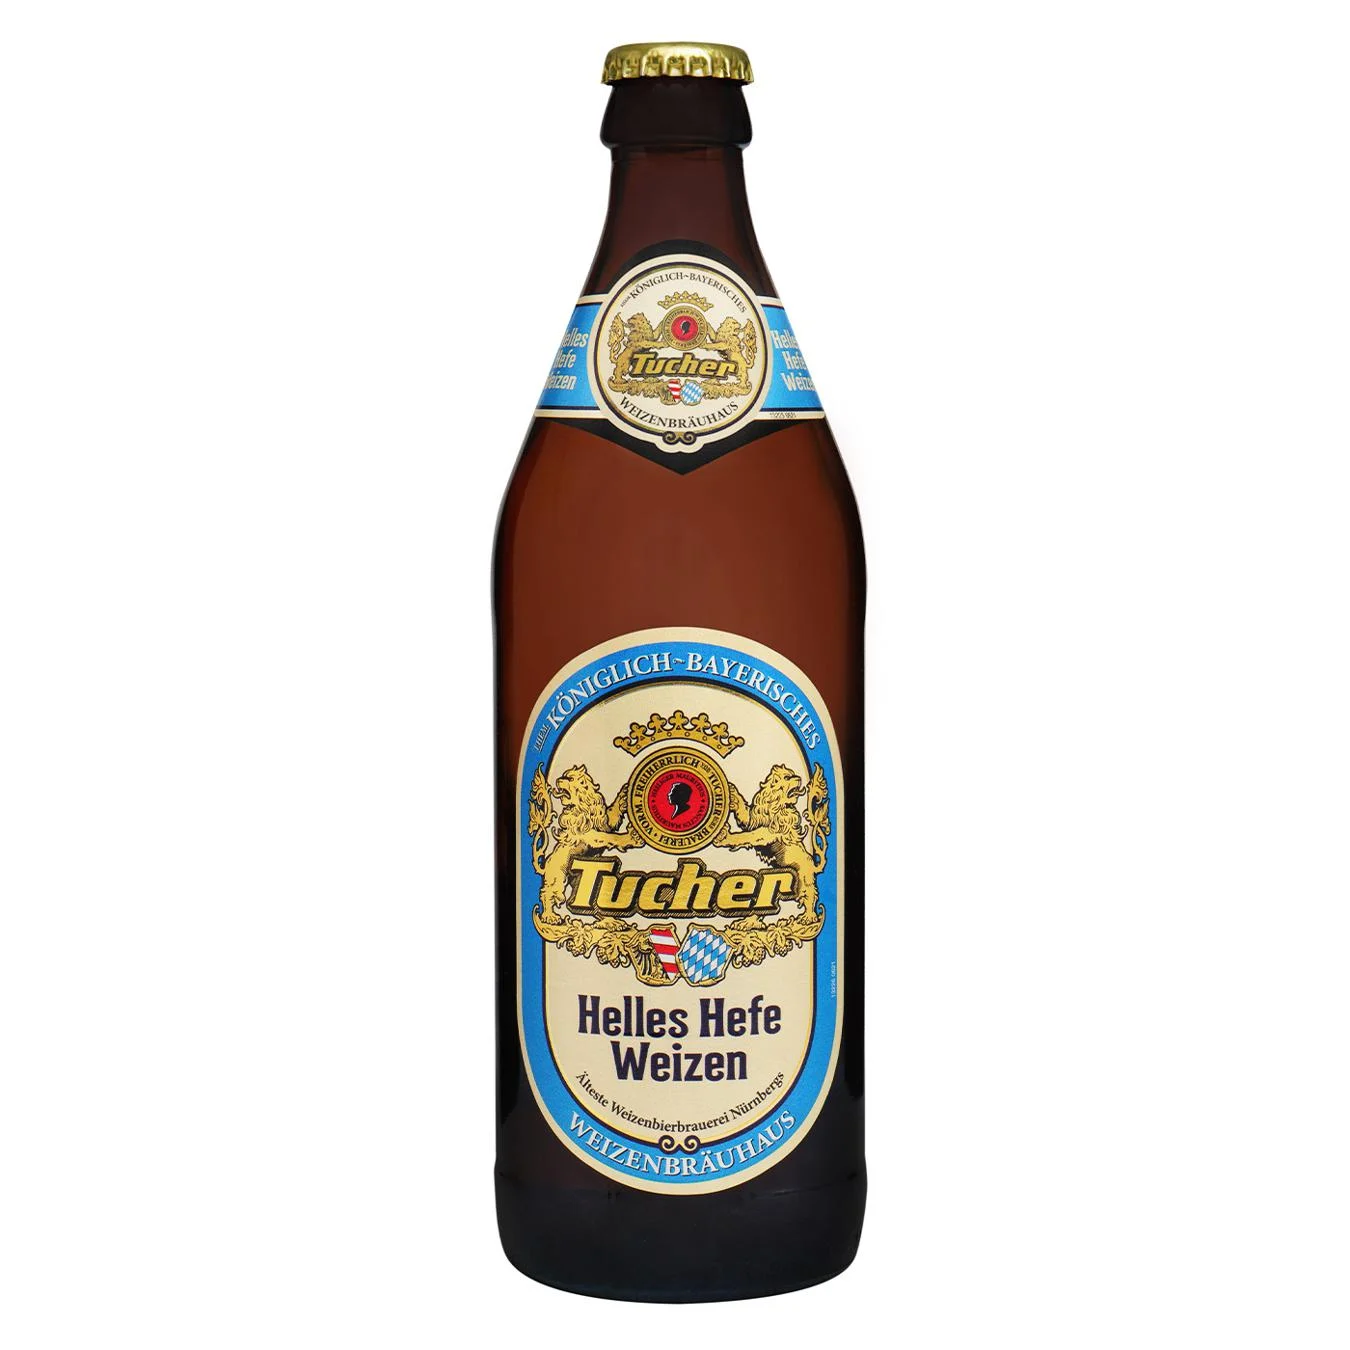 Light beer Tucher Helles Hefe Weizen 5.2% 0.5l glass bottle